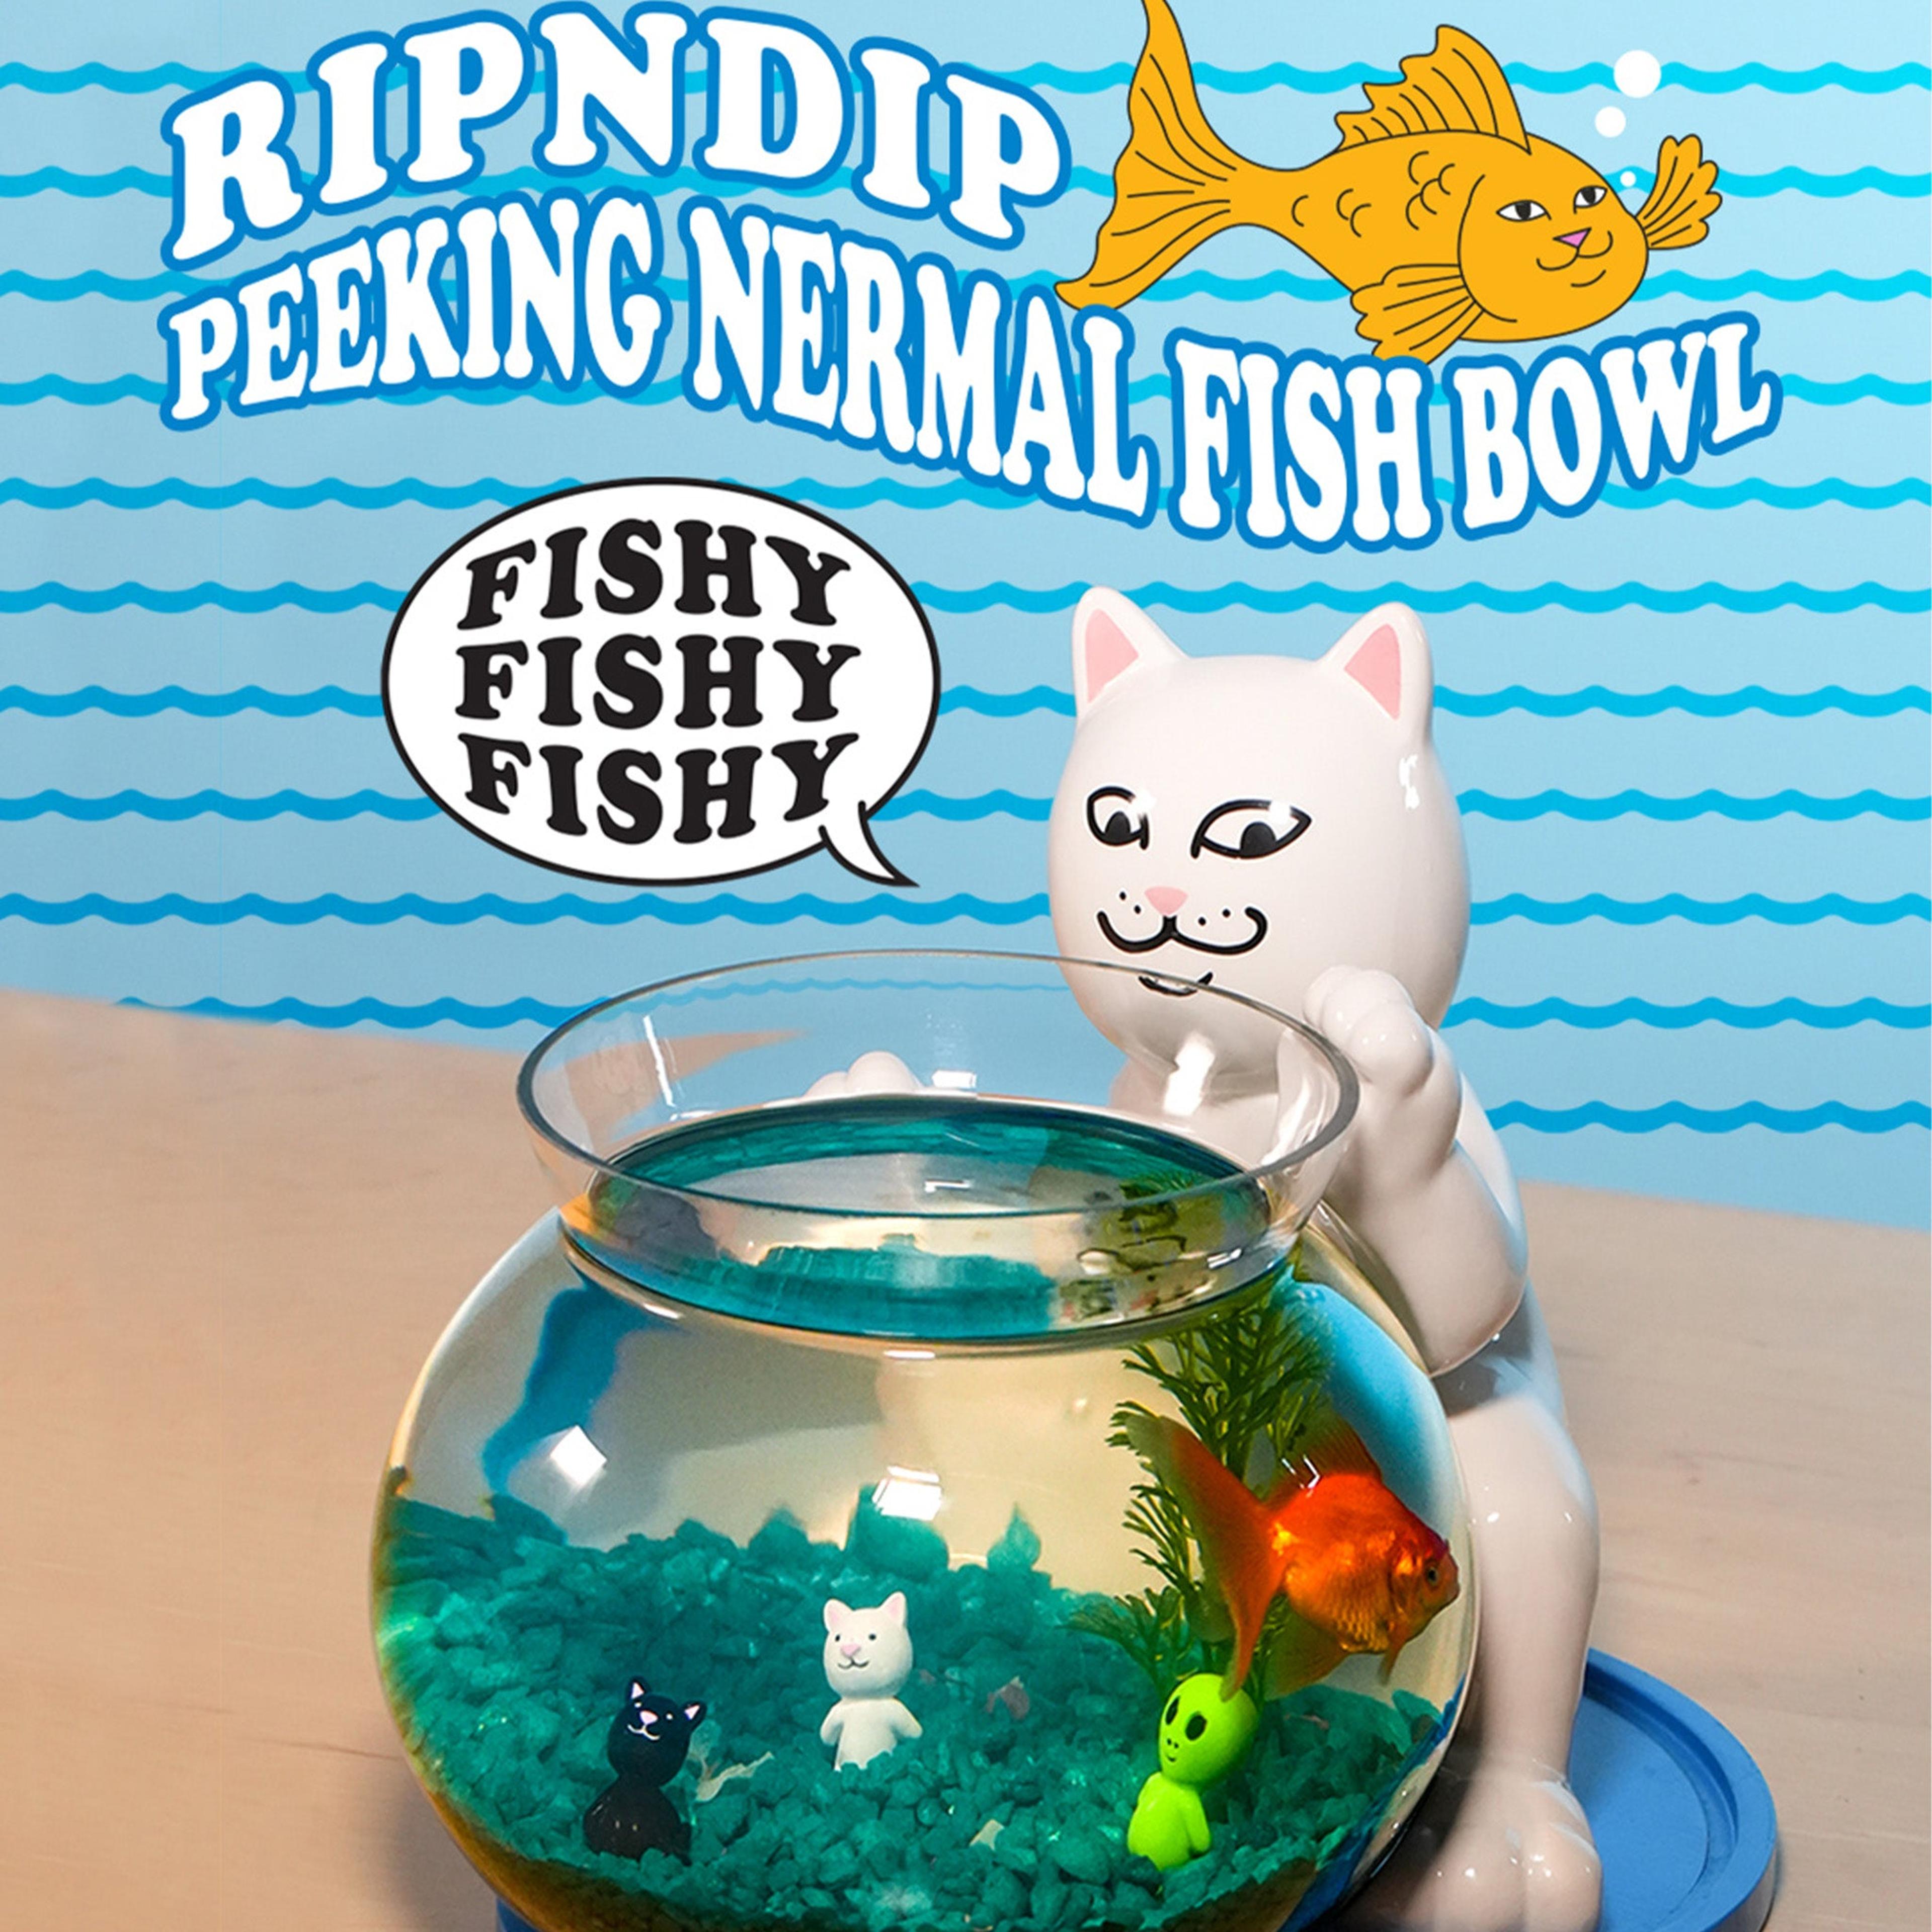 Alternate View 2 of Peeking Nermal Fish Bowl (White)